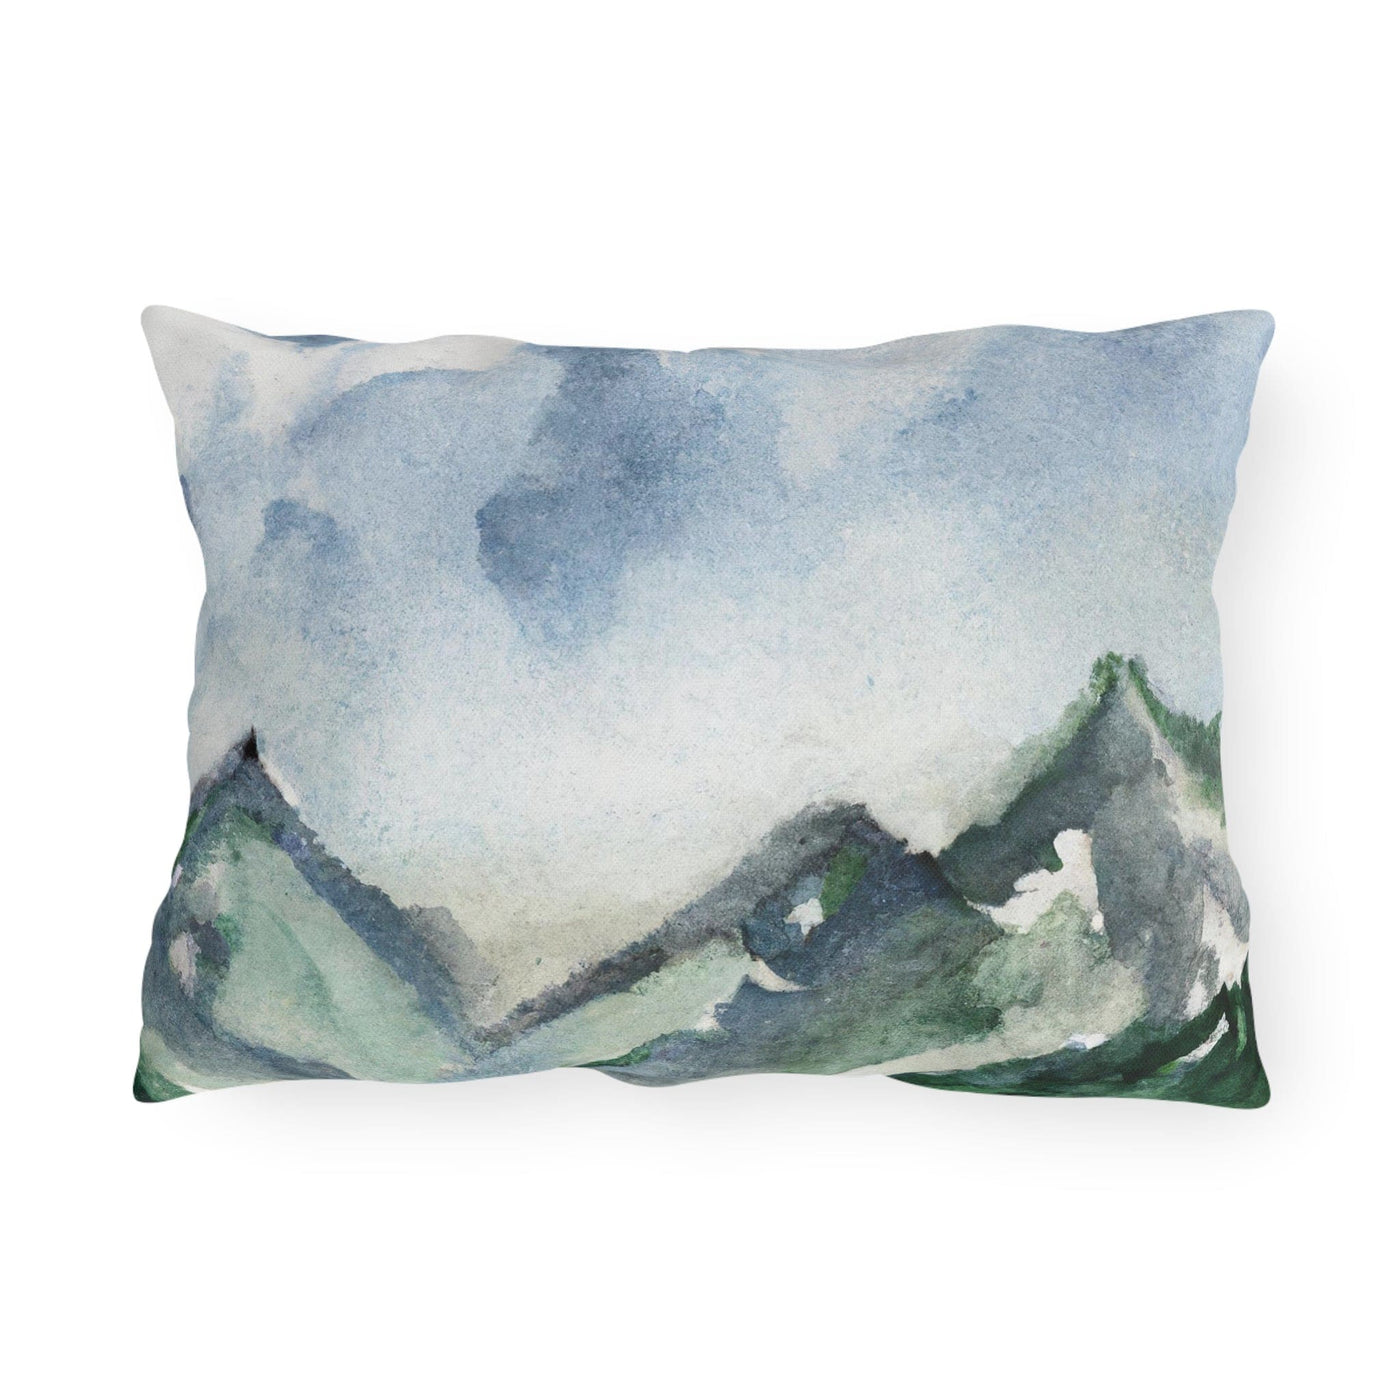 Decorative Outdoor Pillows With Zipper - Set Of 2 Green Mountainside Nature